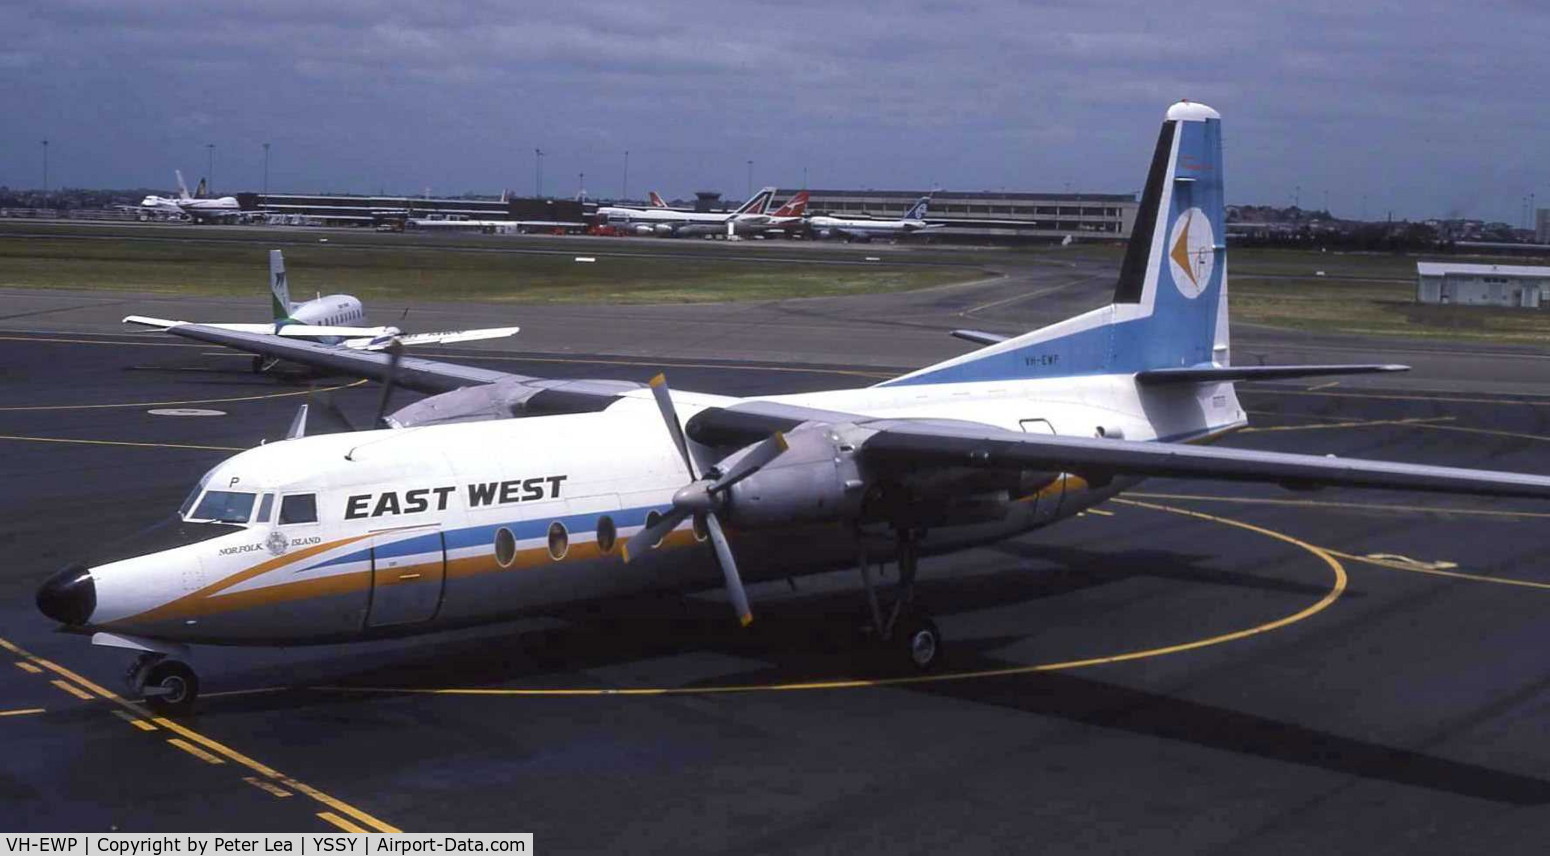 VH-EWP, 1976 Fokker F-27-500RF Friendship C/N 10534, VH-EWP at Sydney Airport during 1981